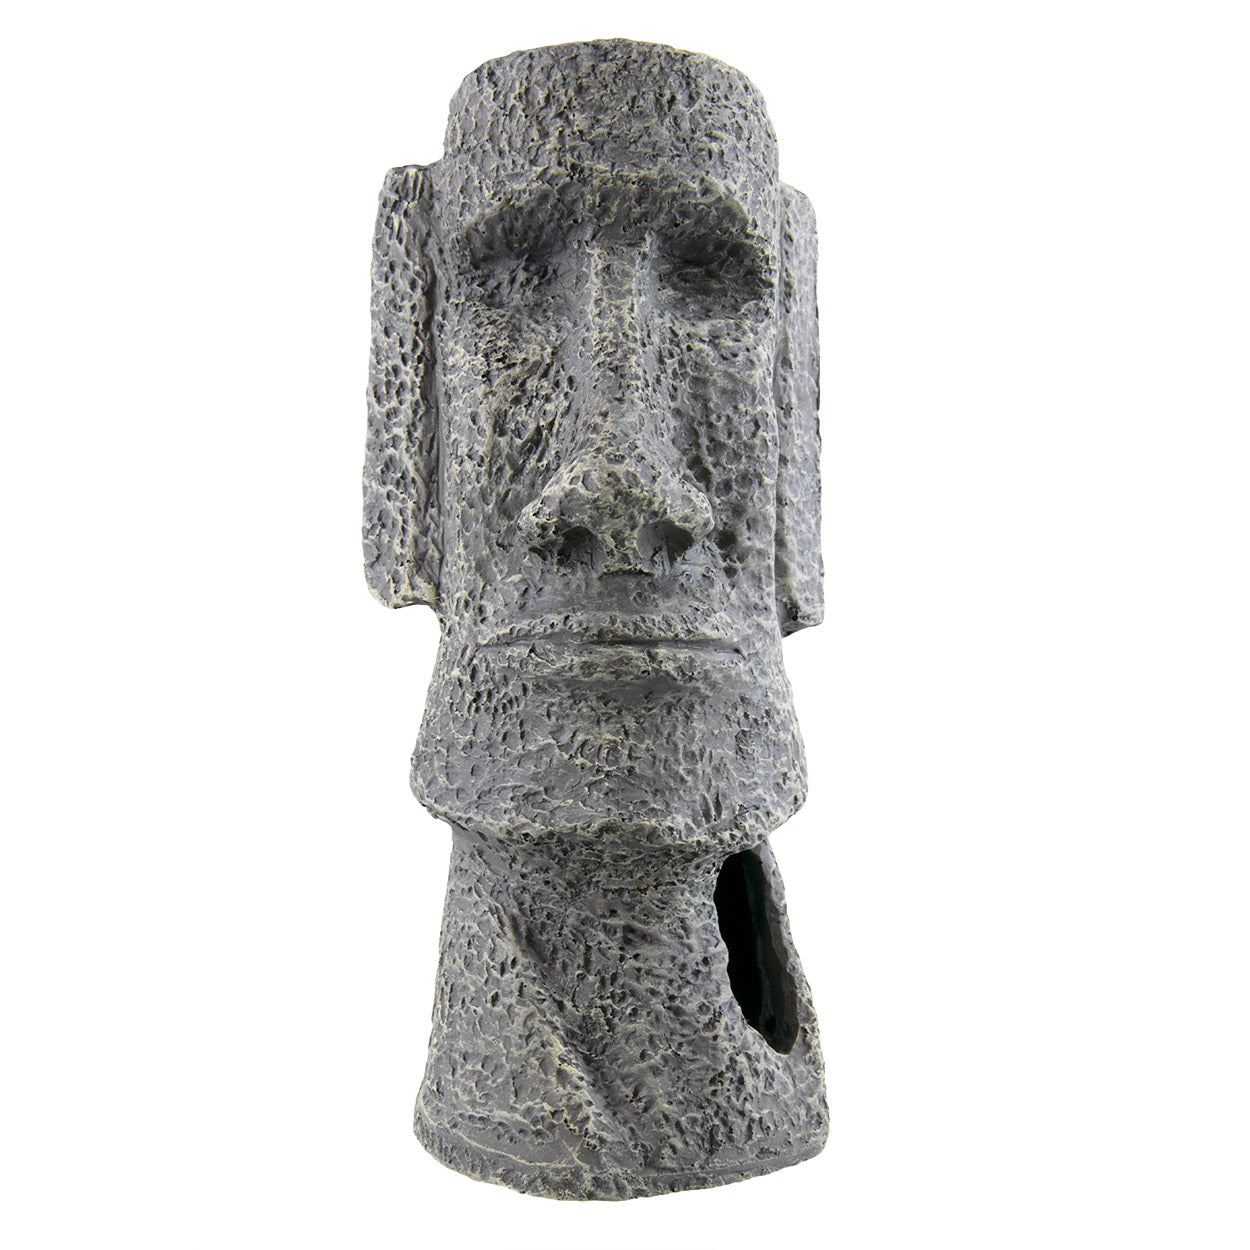 Moai Statue Decor